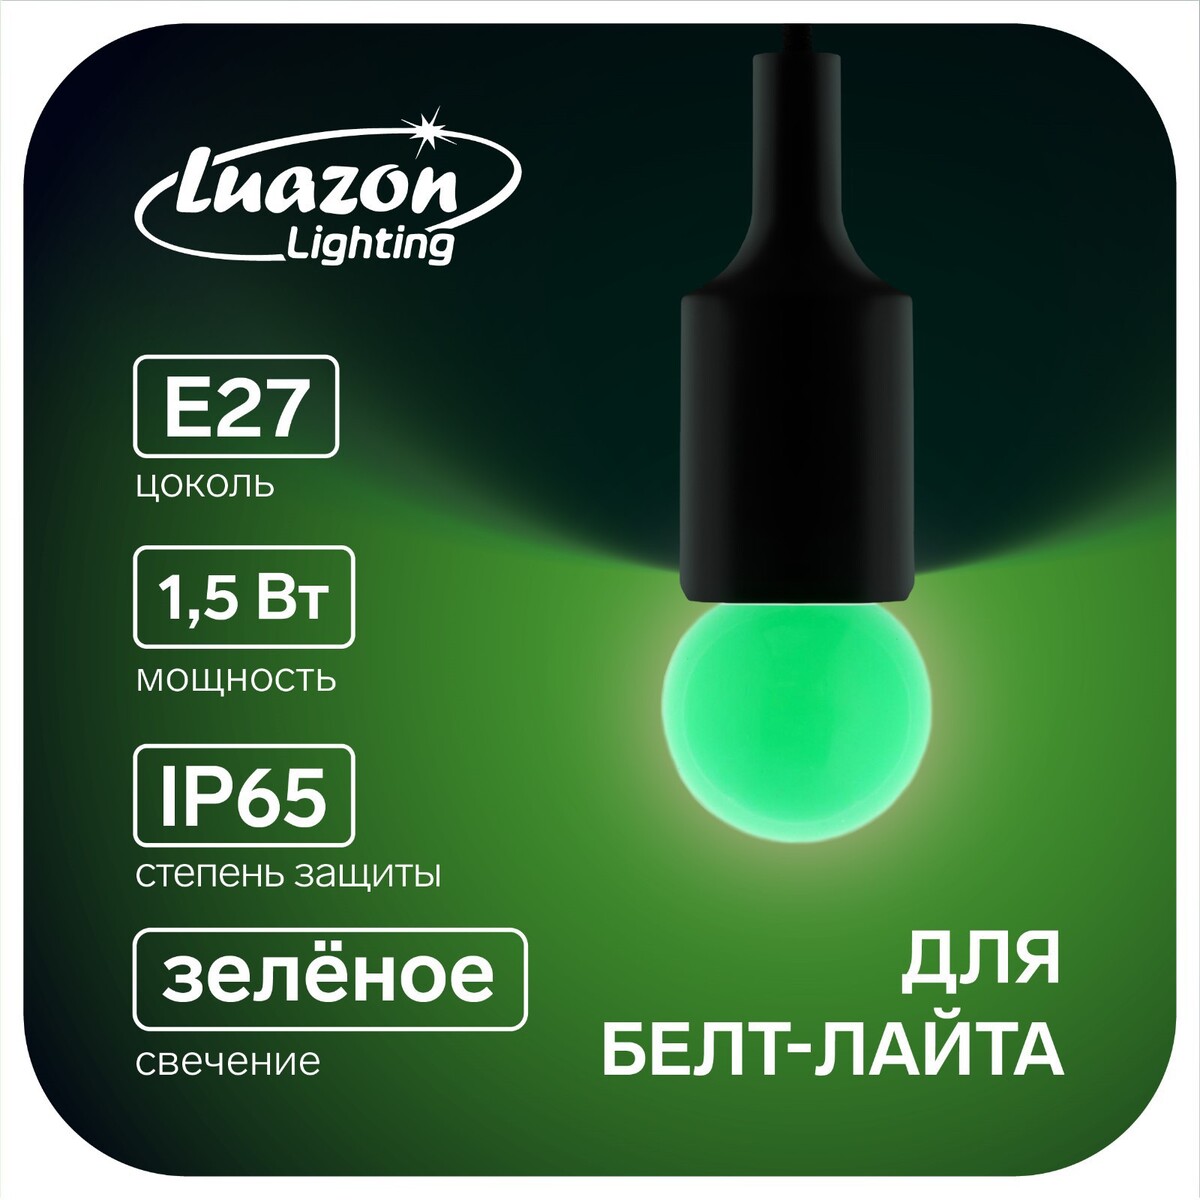   luazon lighting, g45, 27, 1.5 ,  -, ,  20 